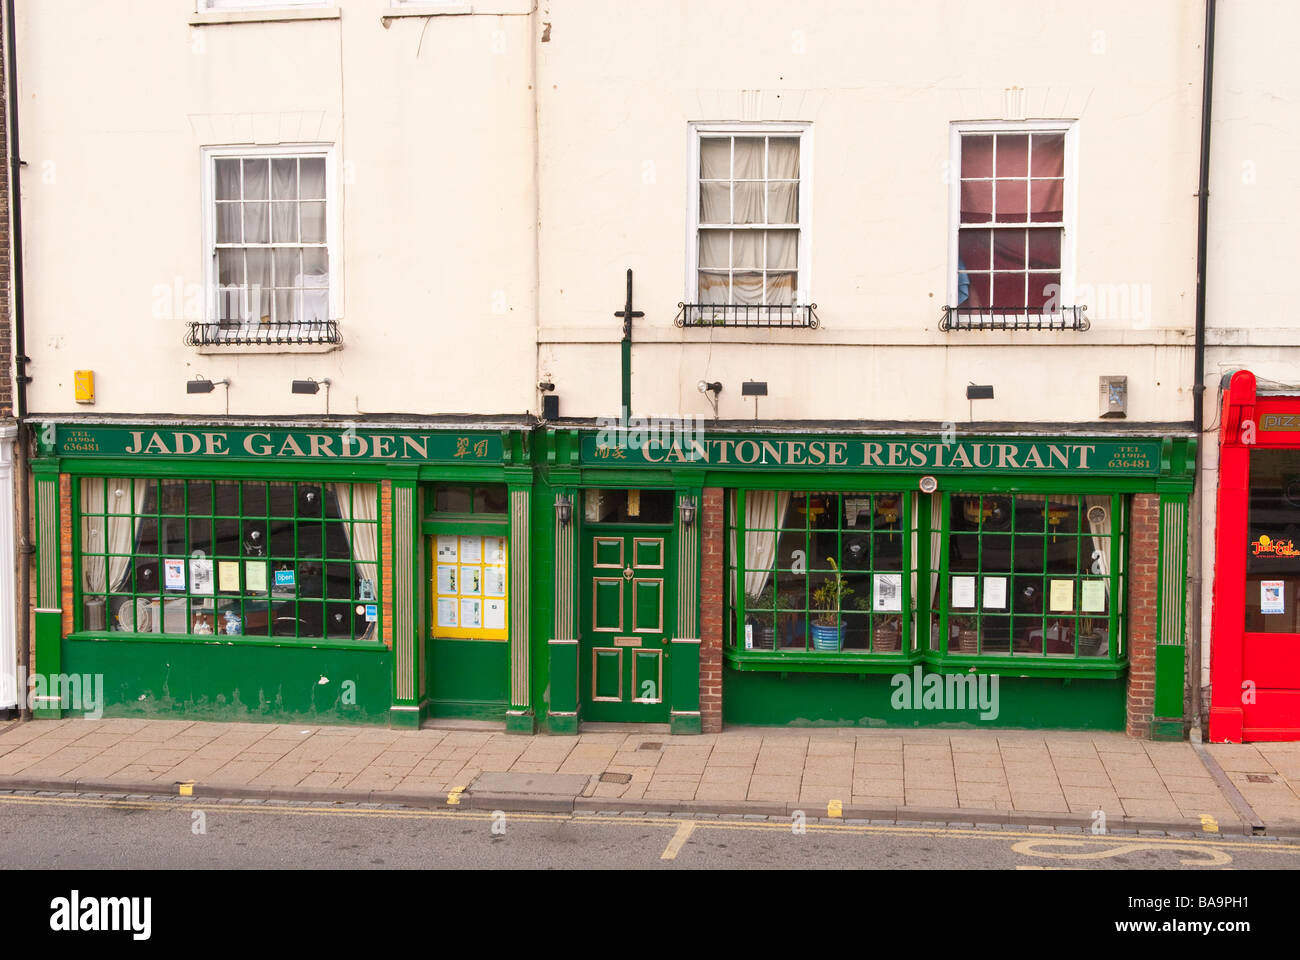 The Jade Garden cantonese restaurant in York,Yorkshire,Uk Stock Photo